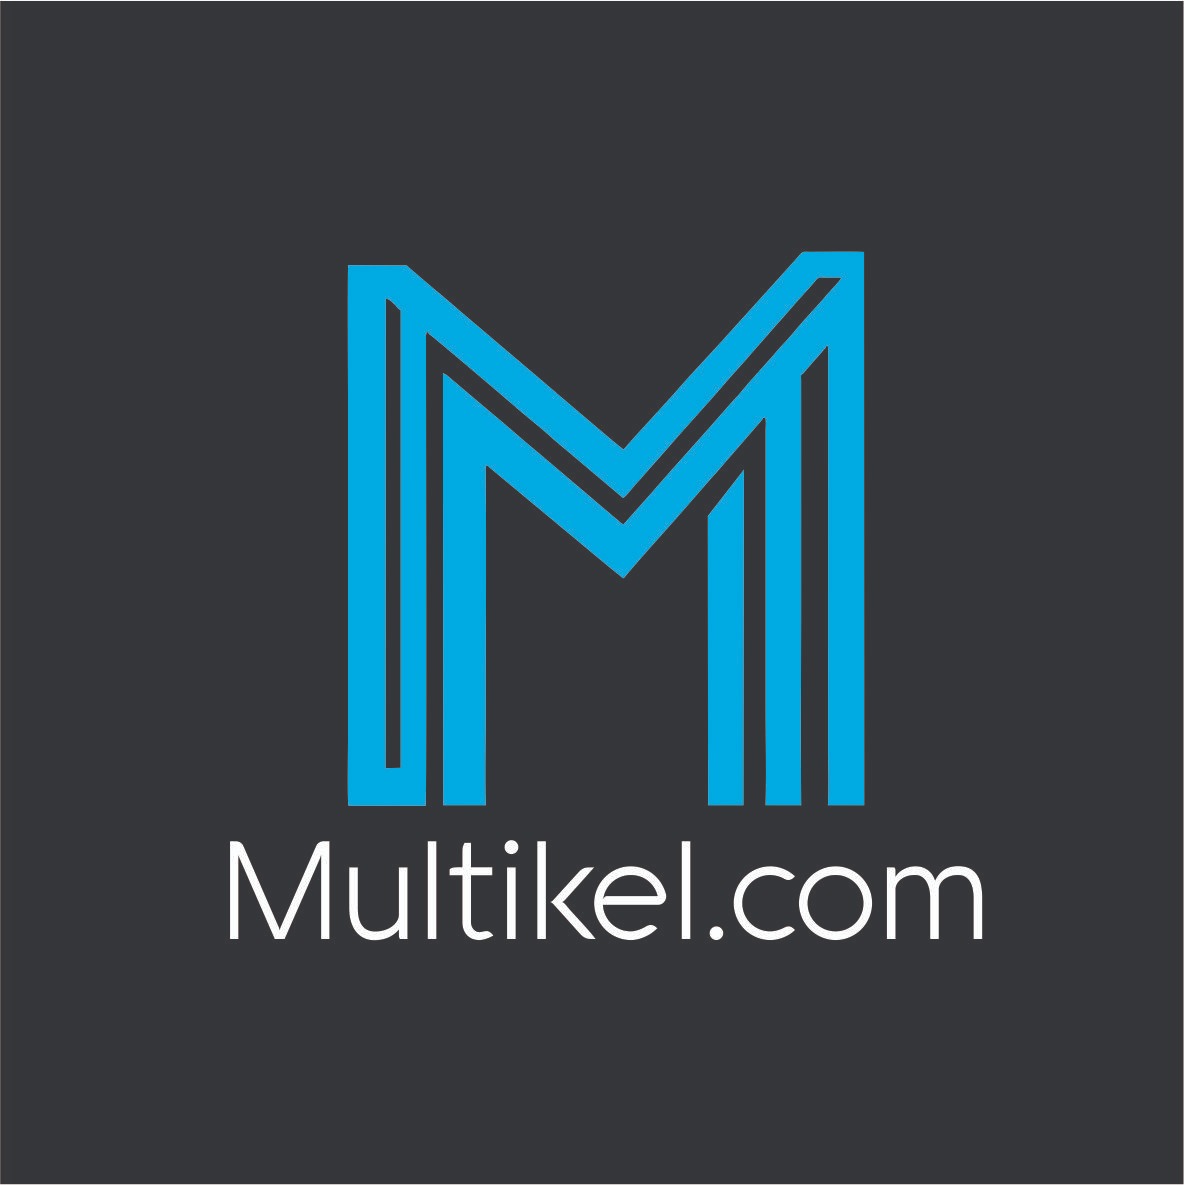 Part of Multikel.com